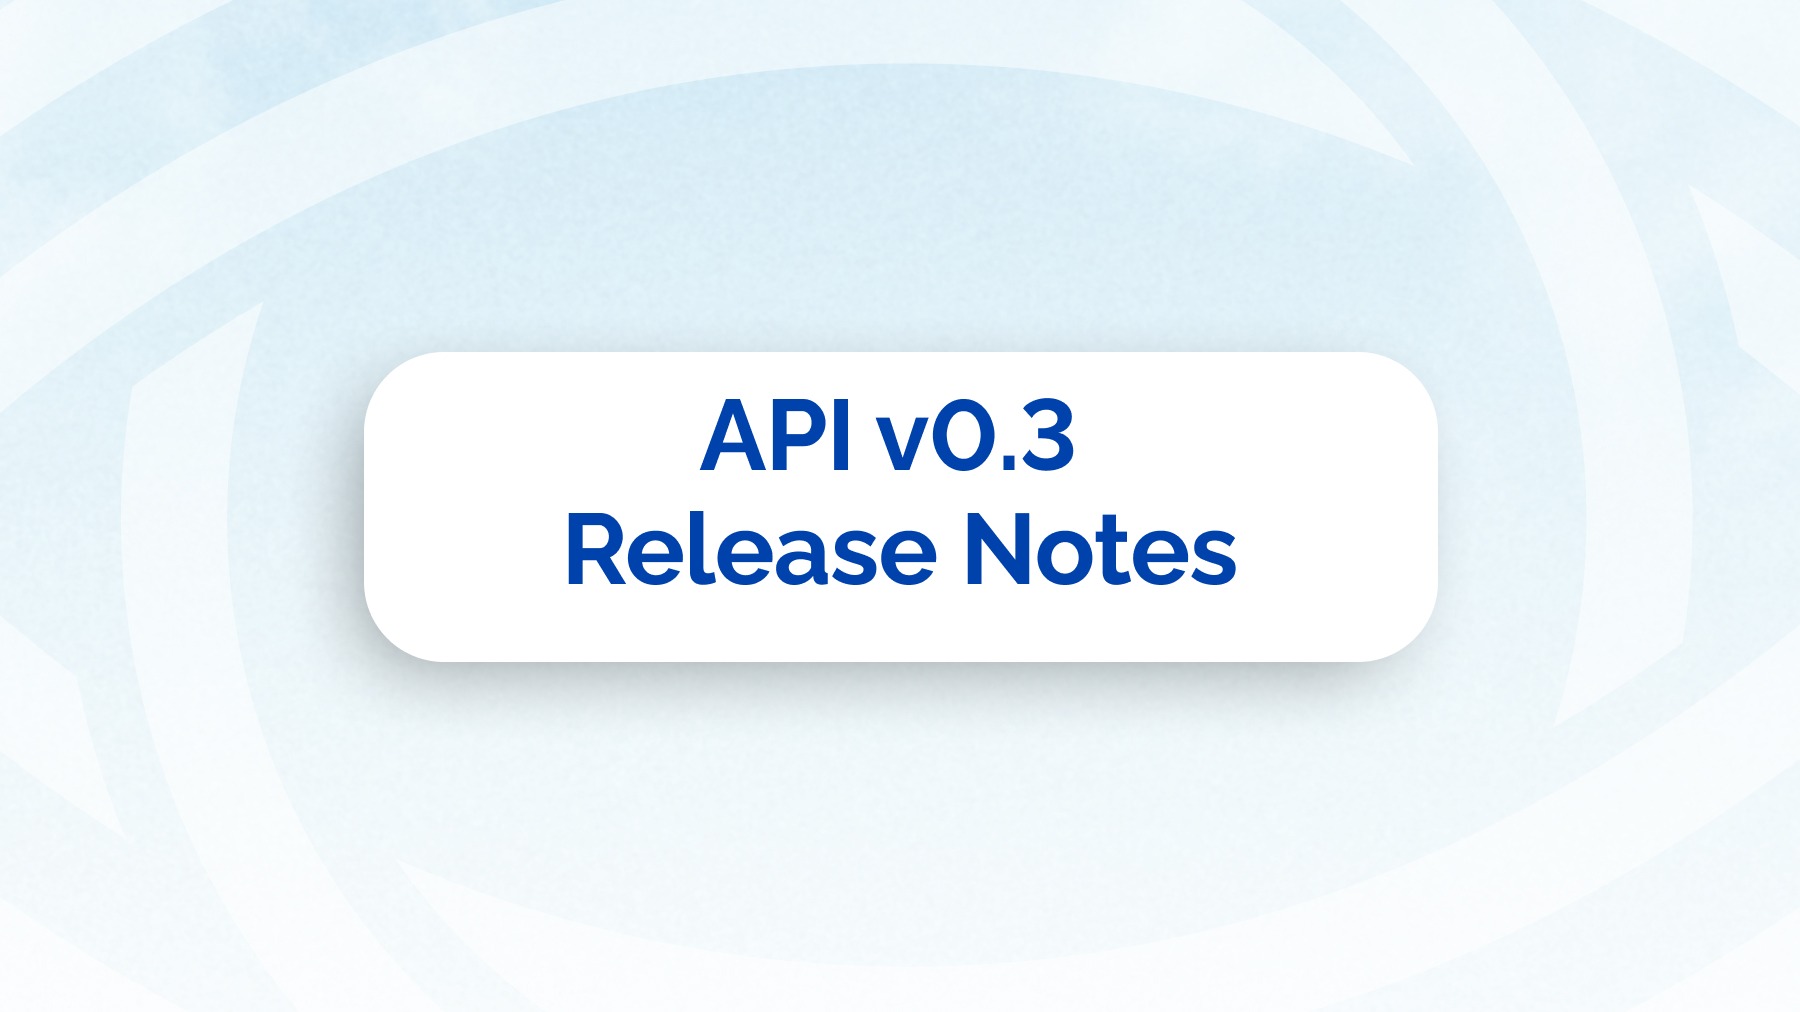 PlanetWatch API Release v0.3